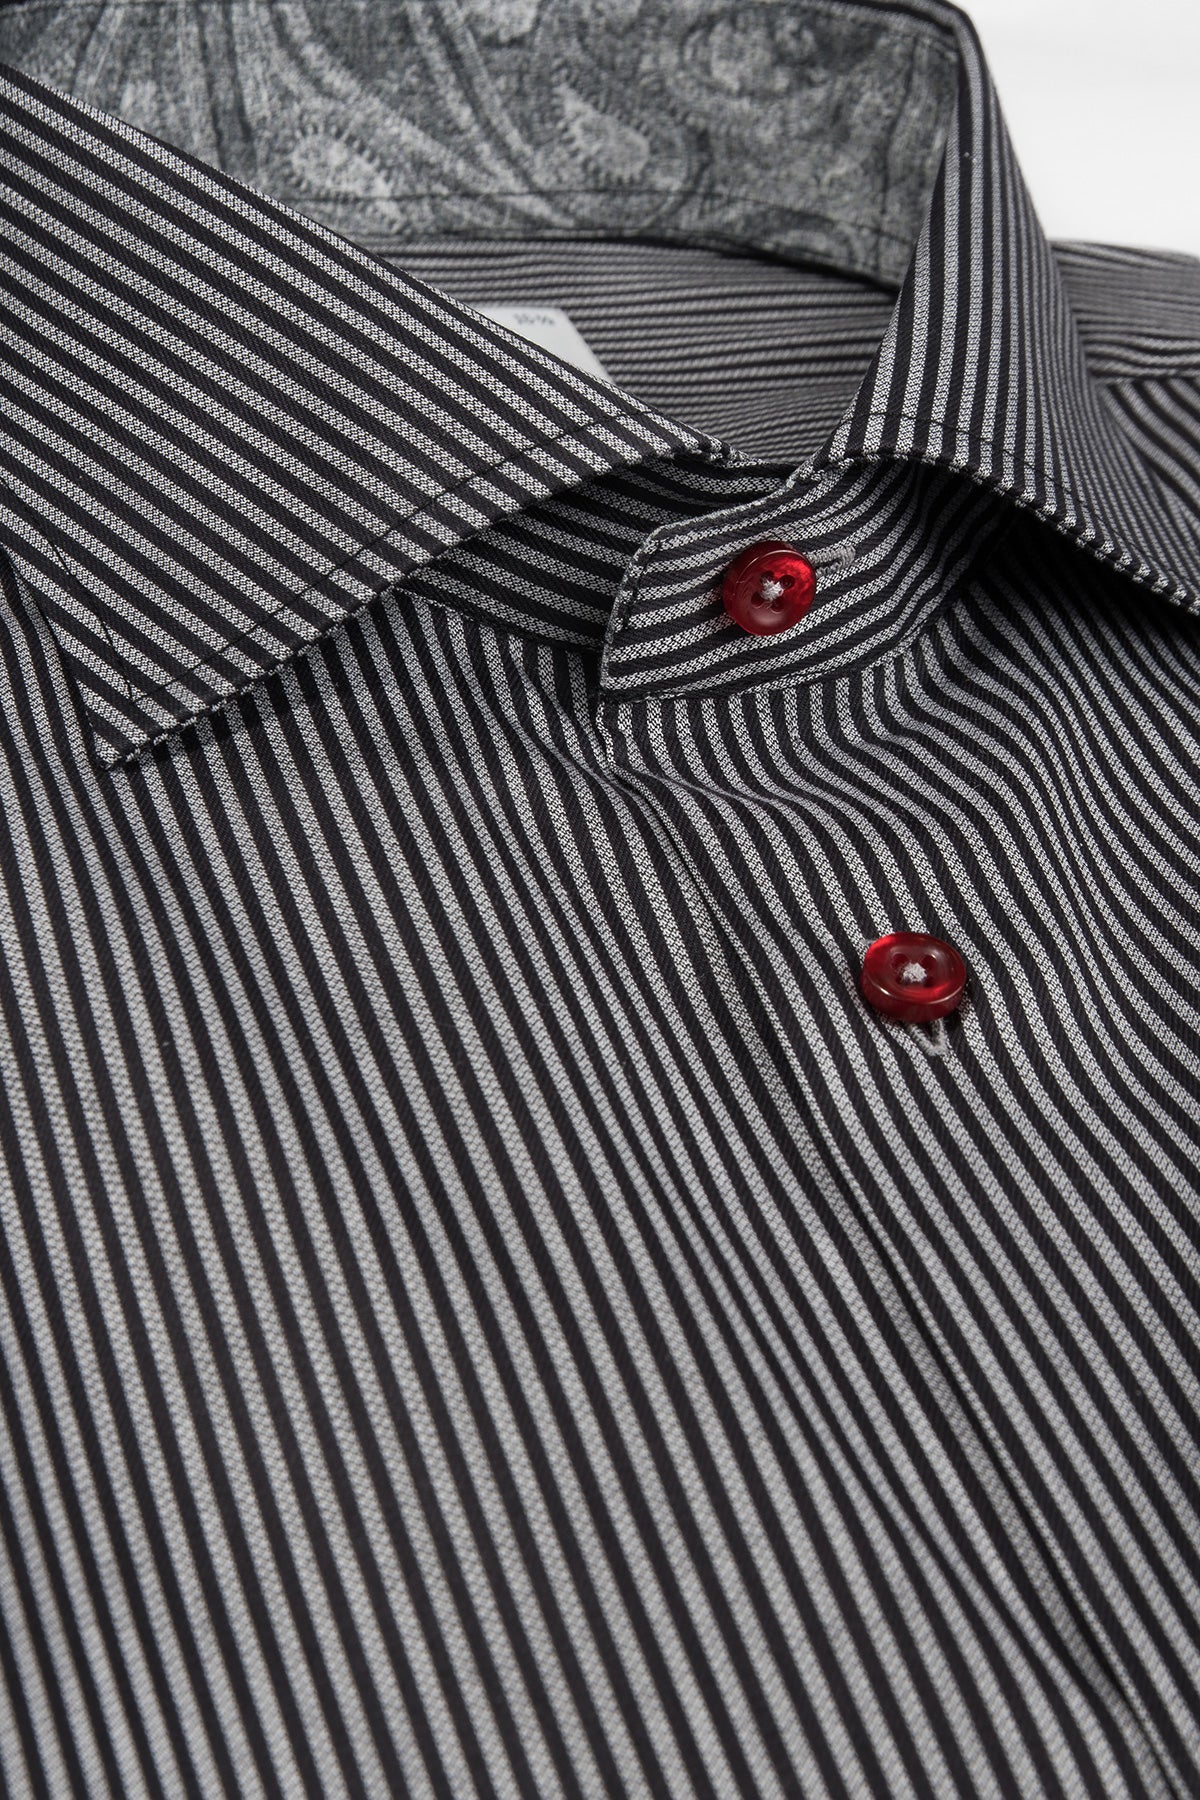 Black striped regular fit shirt with contrast details